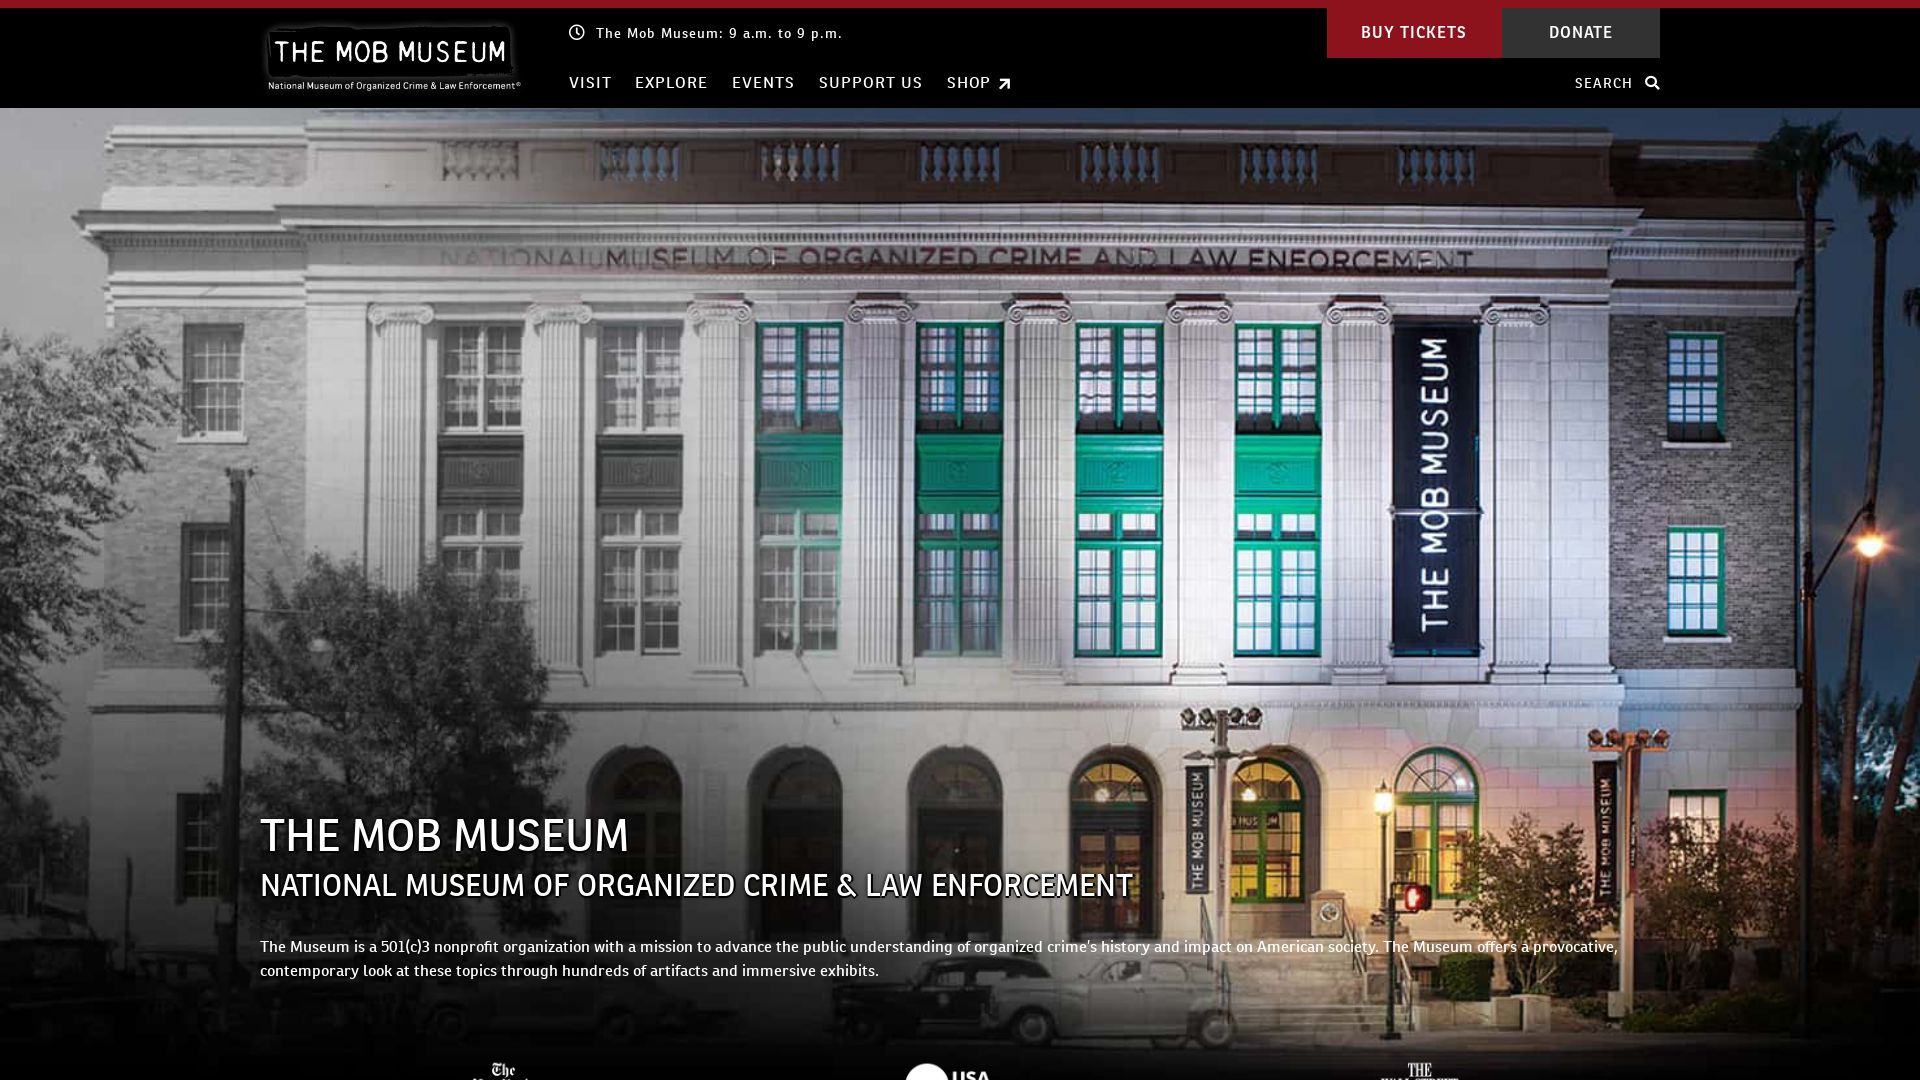 Website status themobmuseum.org is   ONLINE